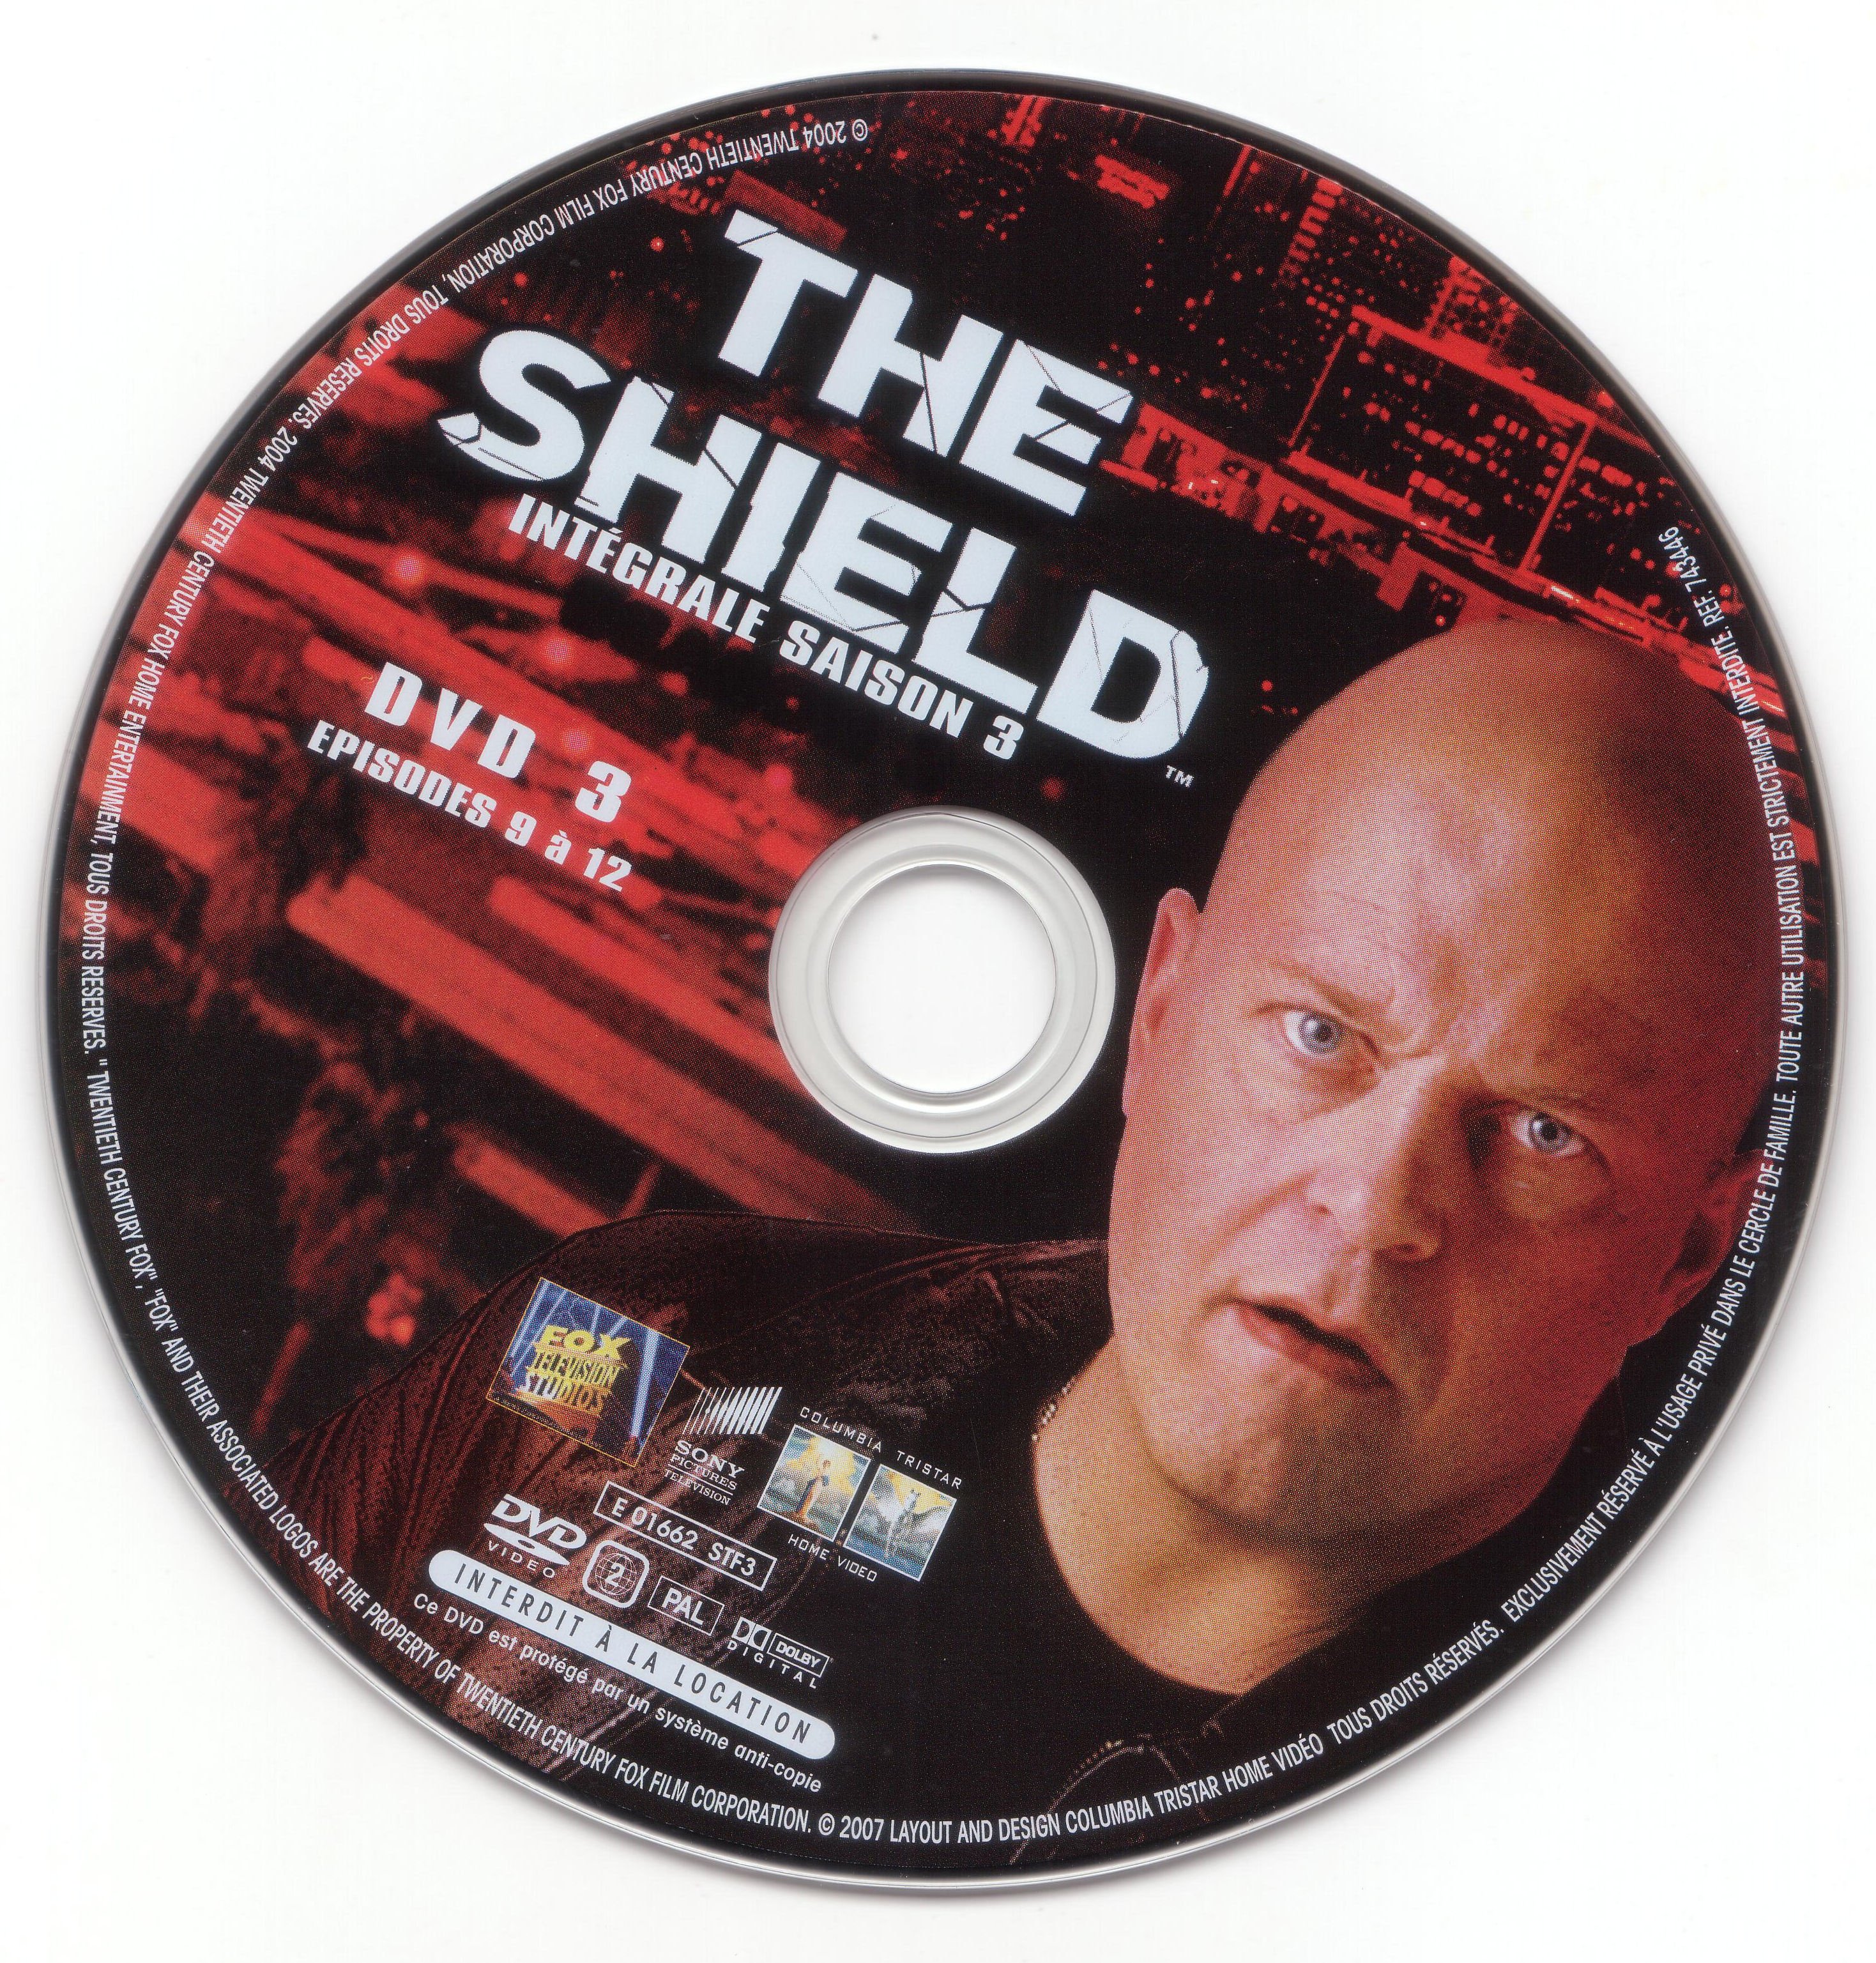 The shield Saison 3 DVD 3